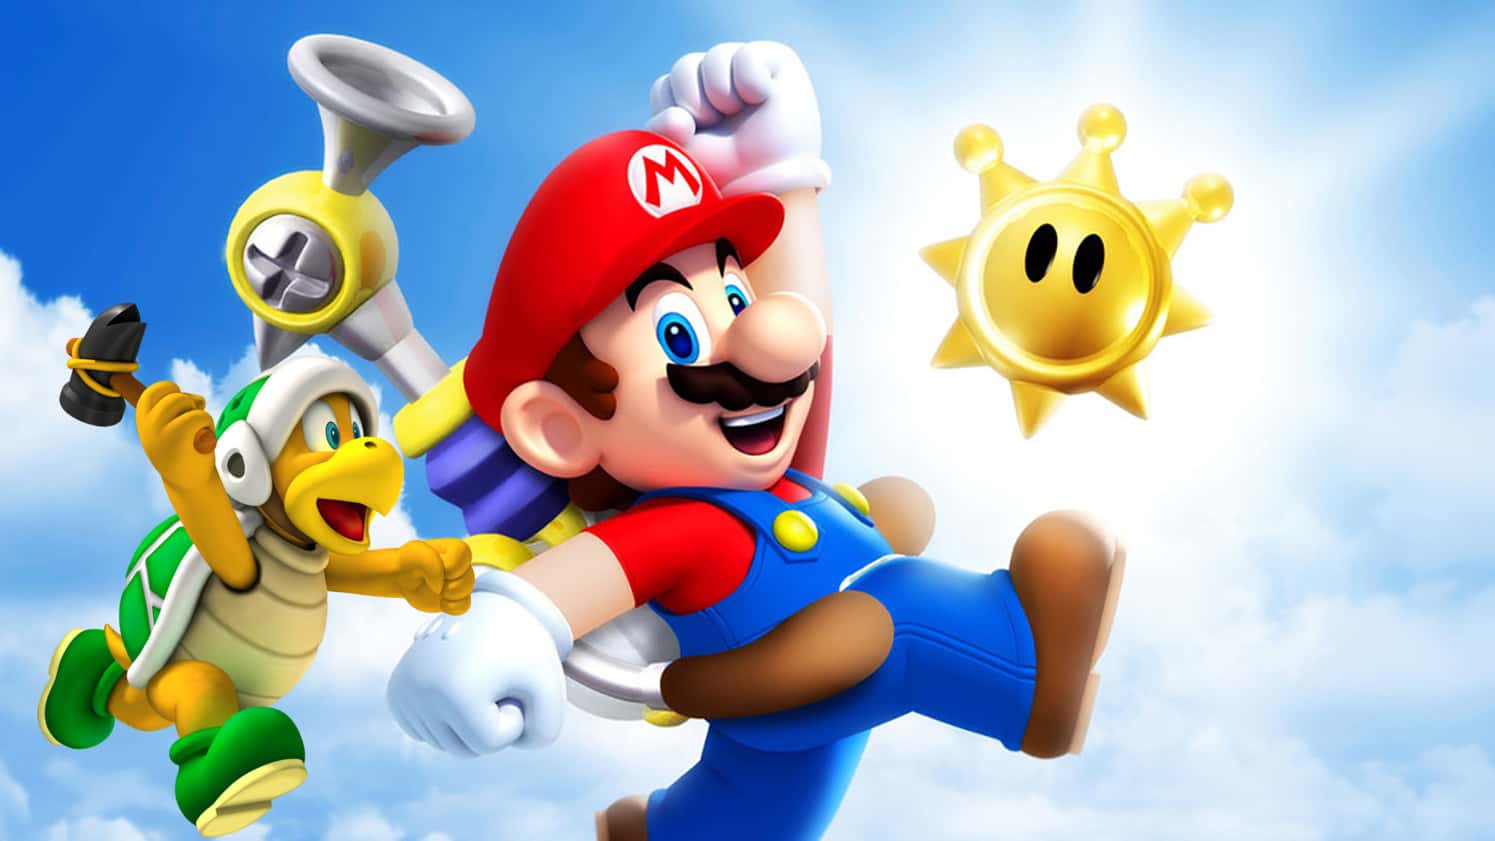 Super Mario & Friends facts